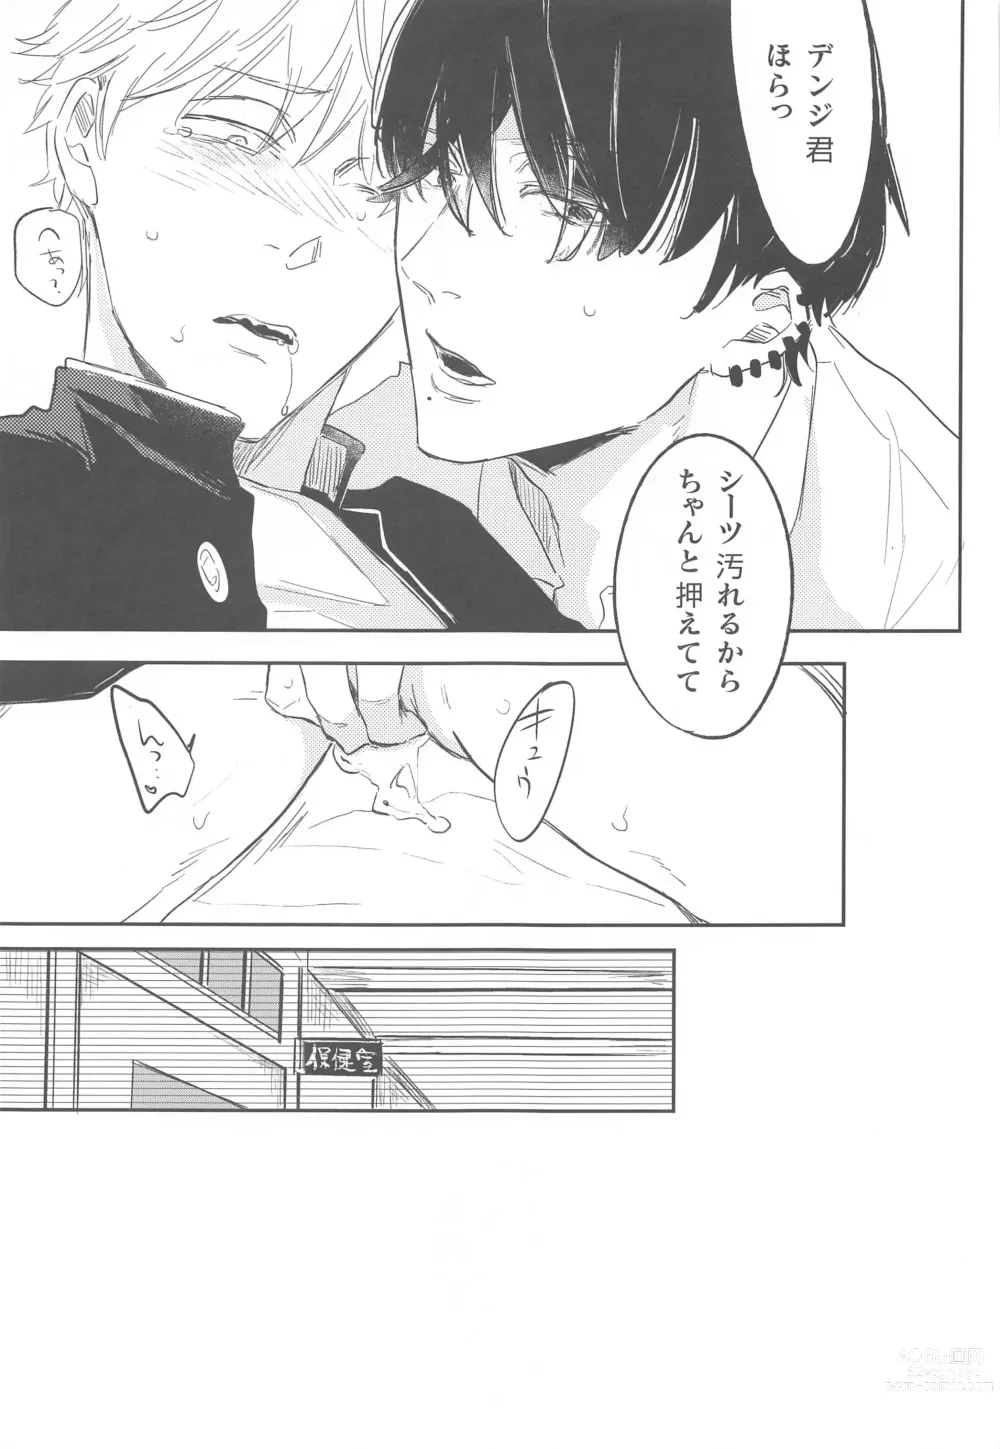 Page 26 of doujinshi Ame to Muchi